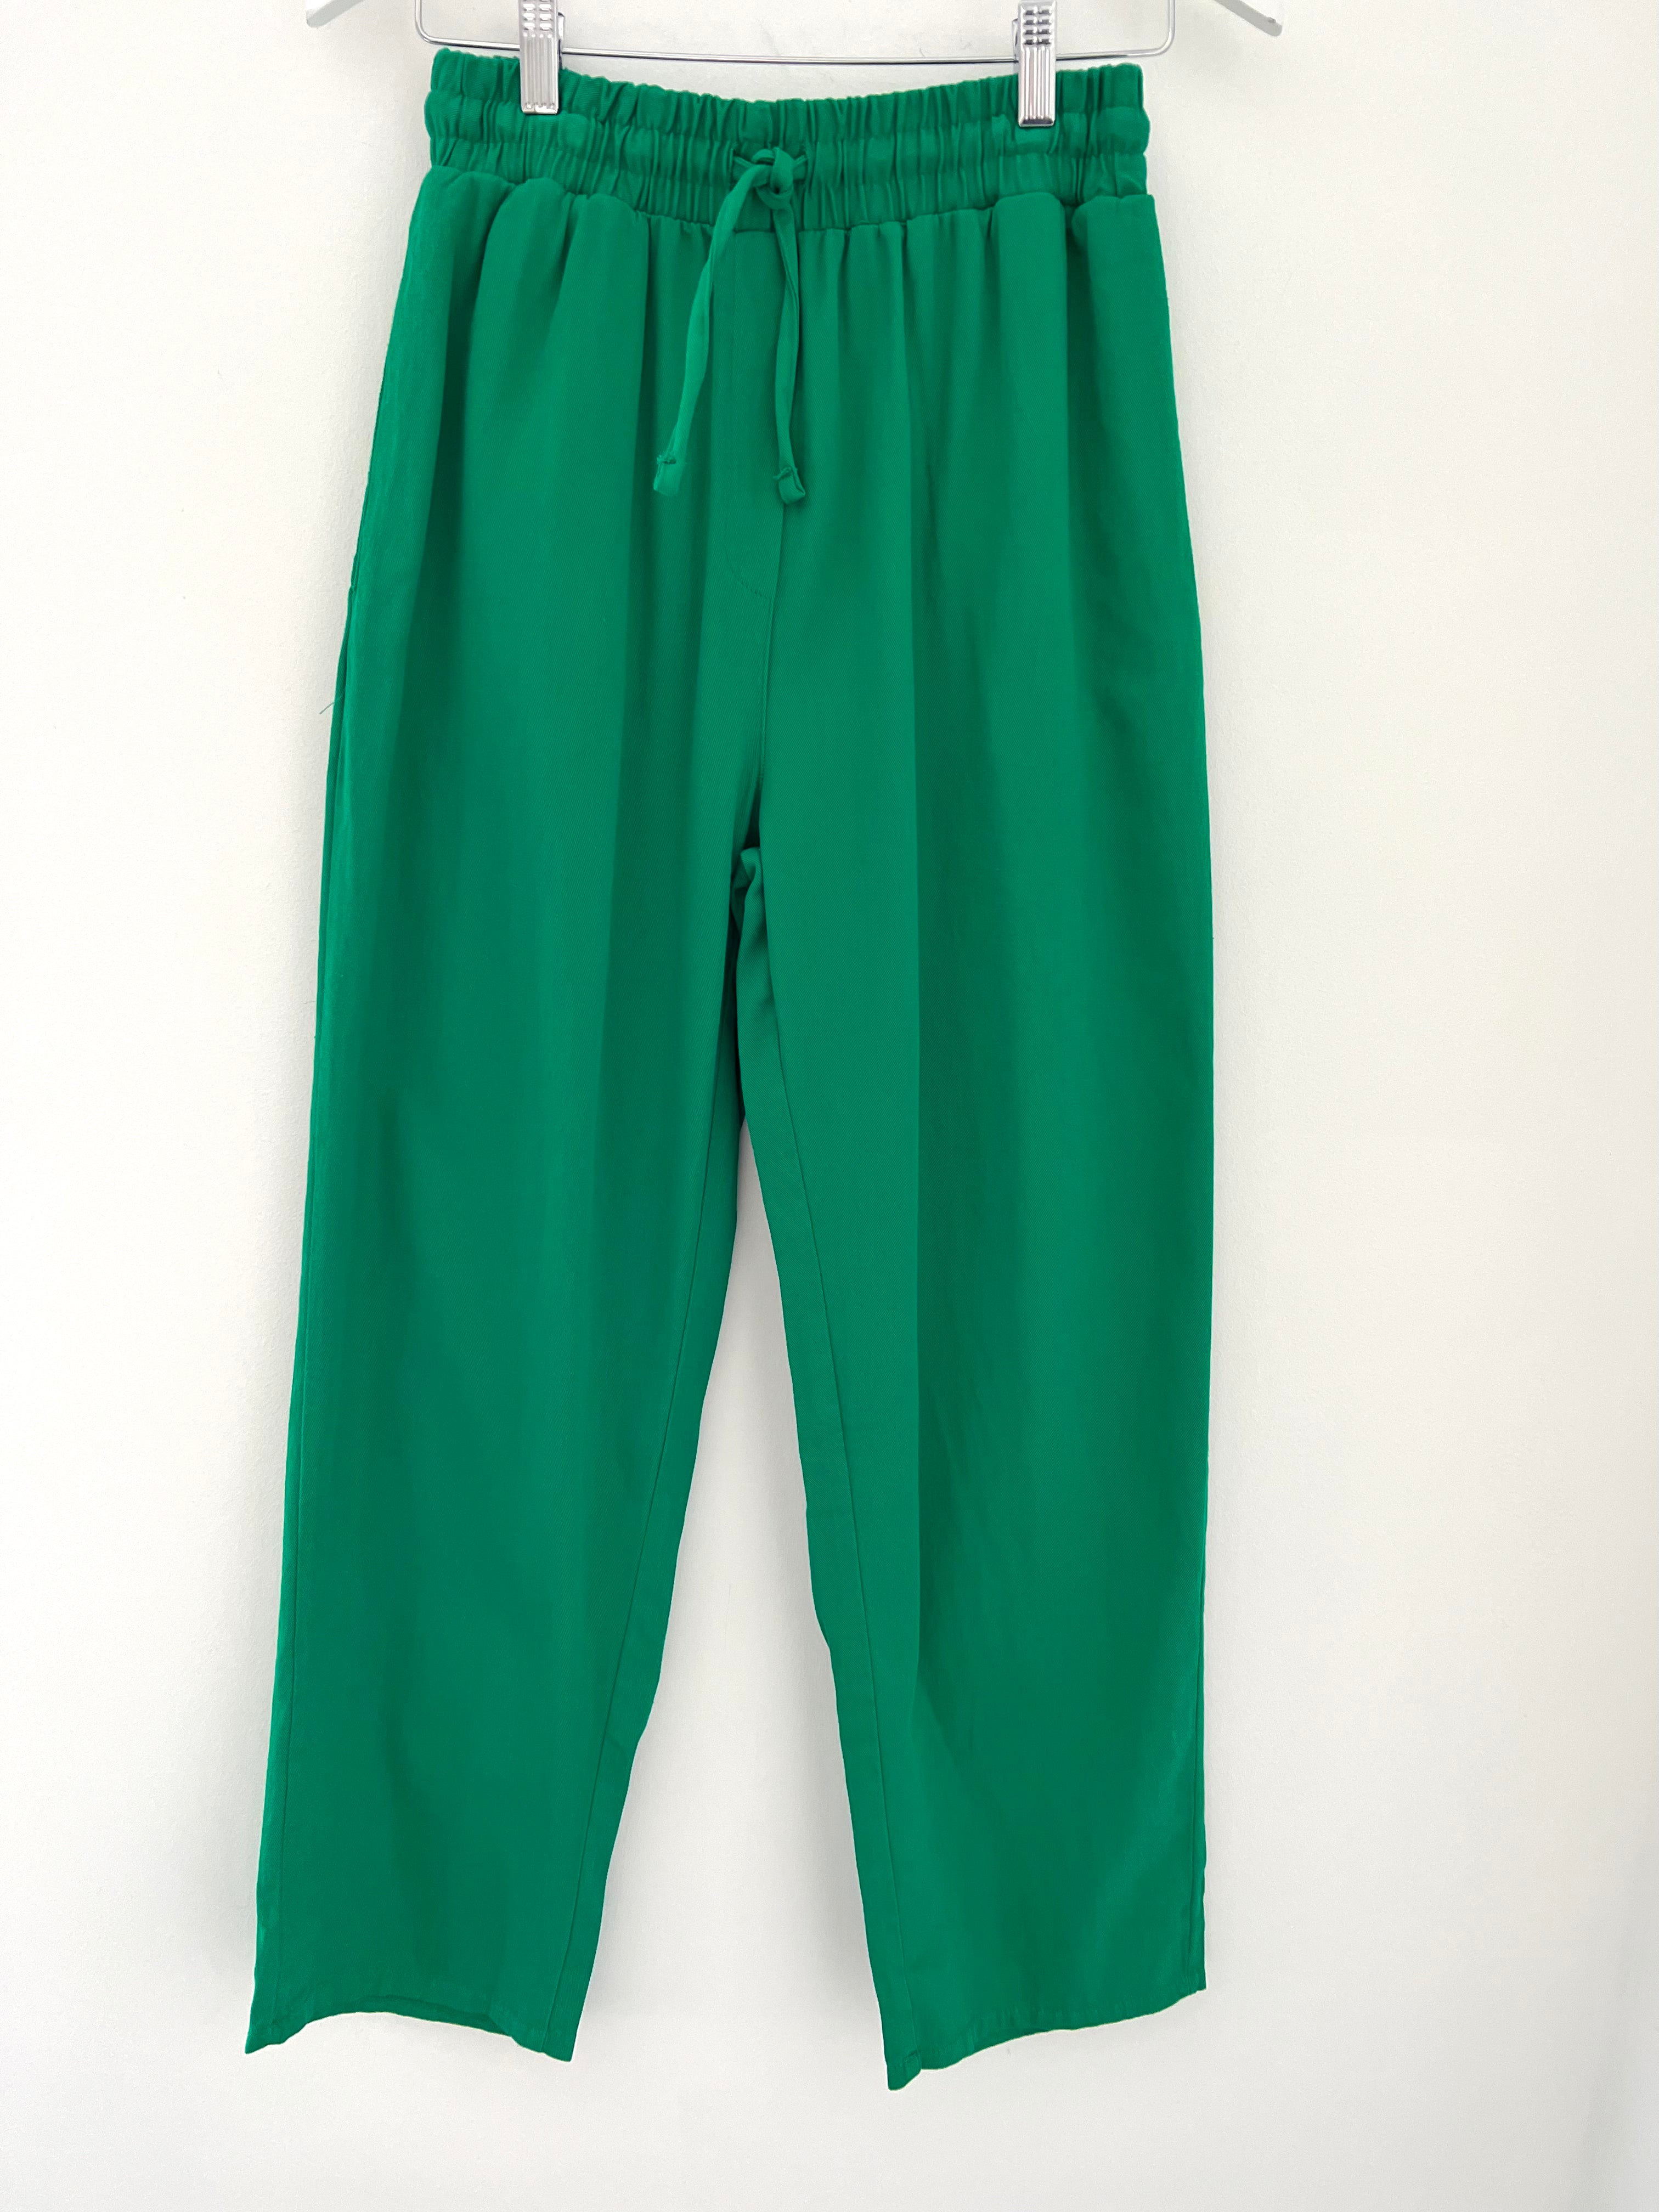 Wide Leg Cotton Trousers in Emerald